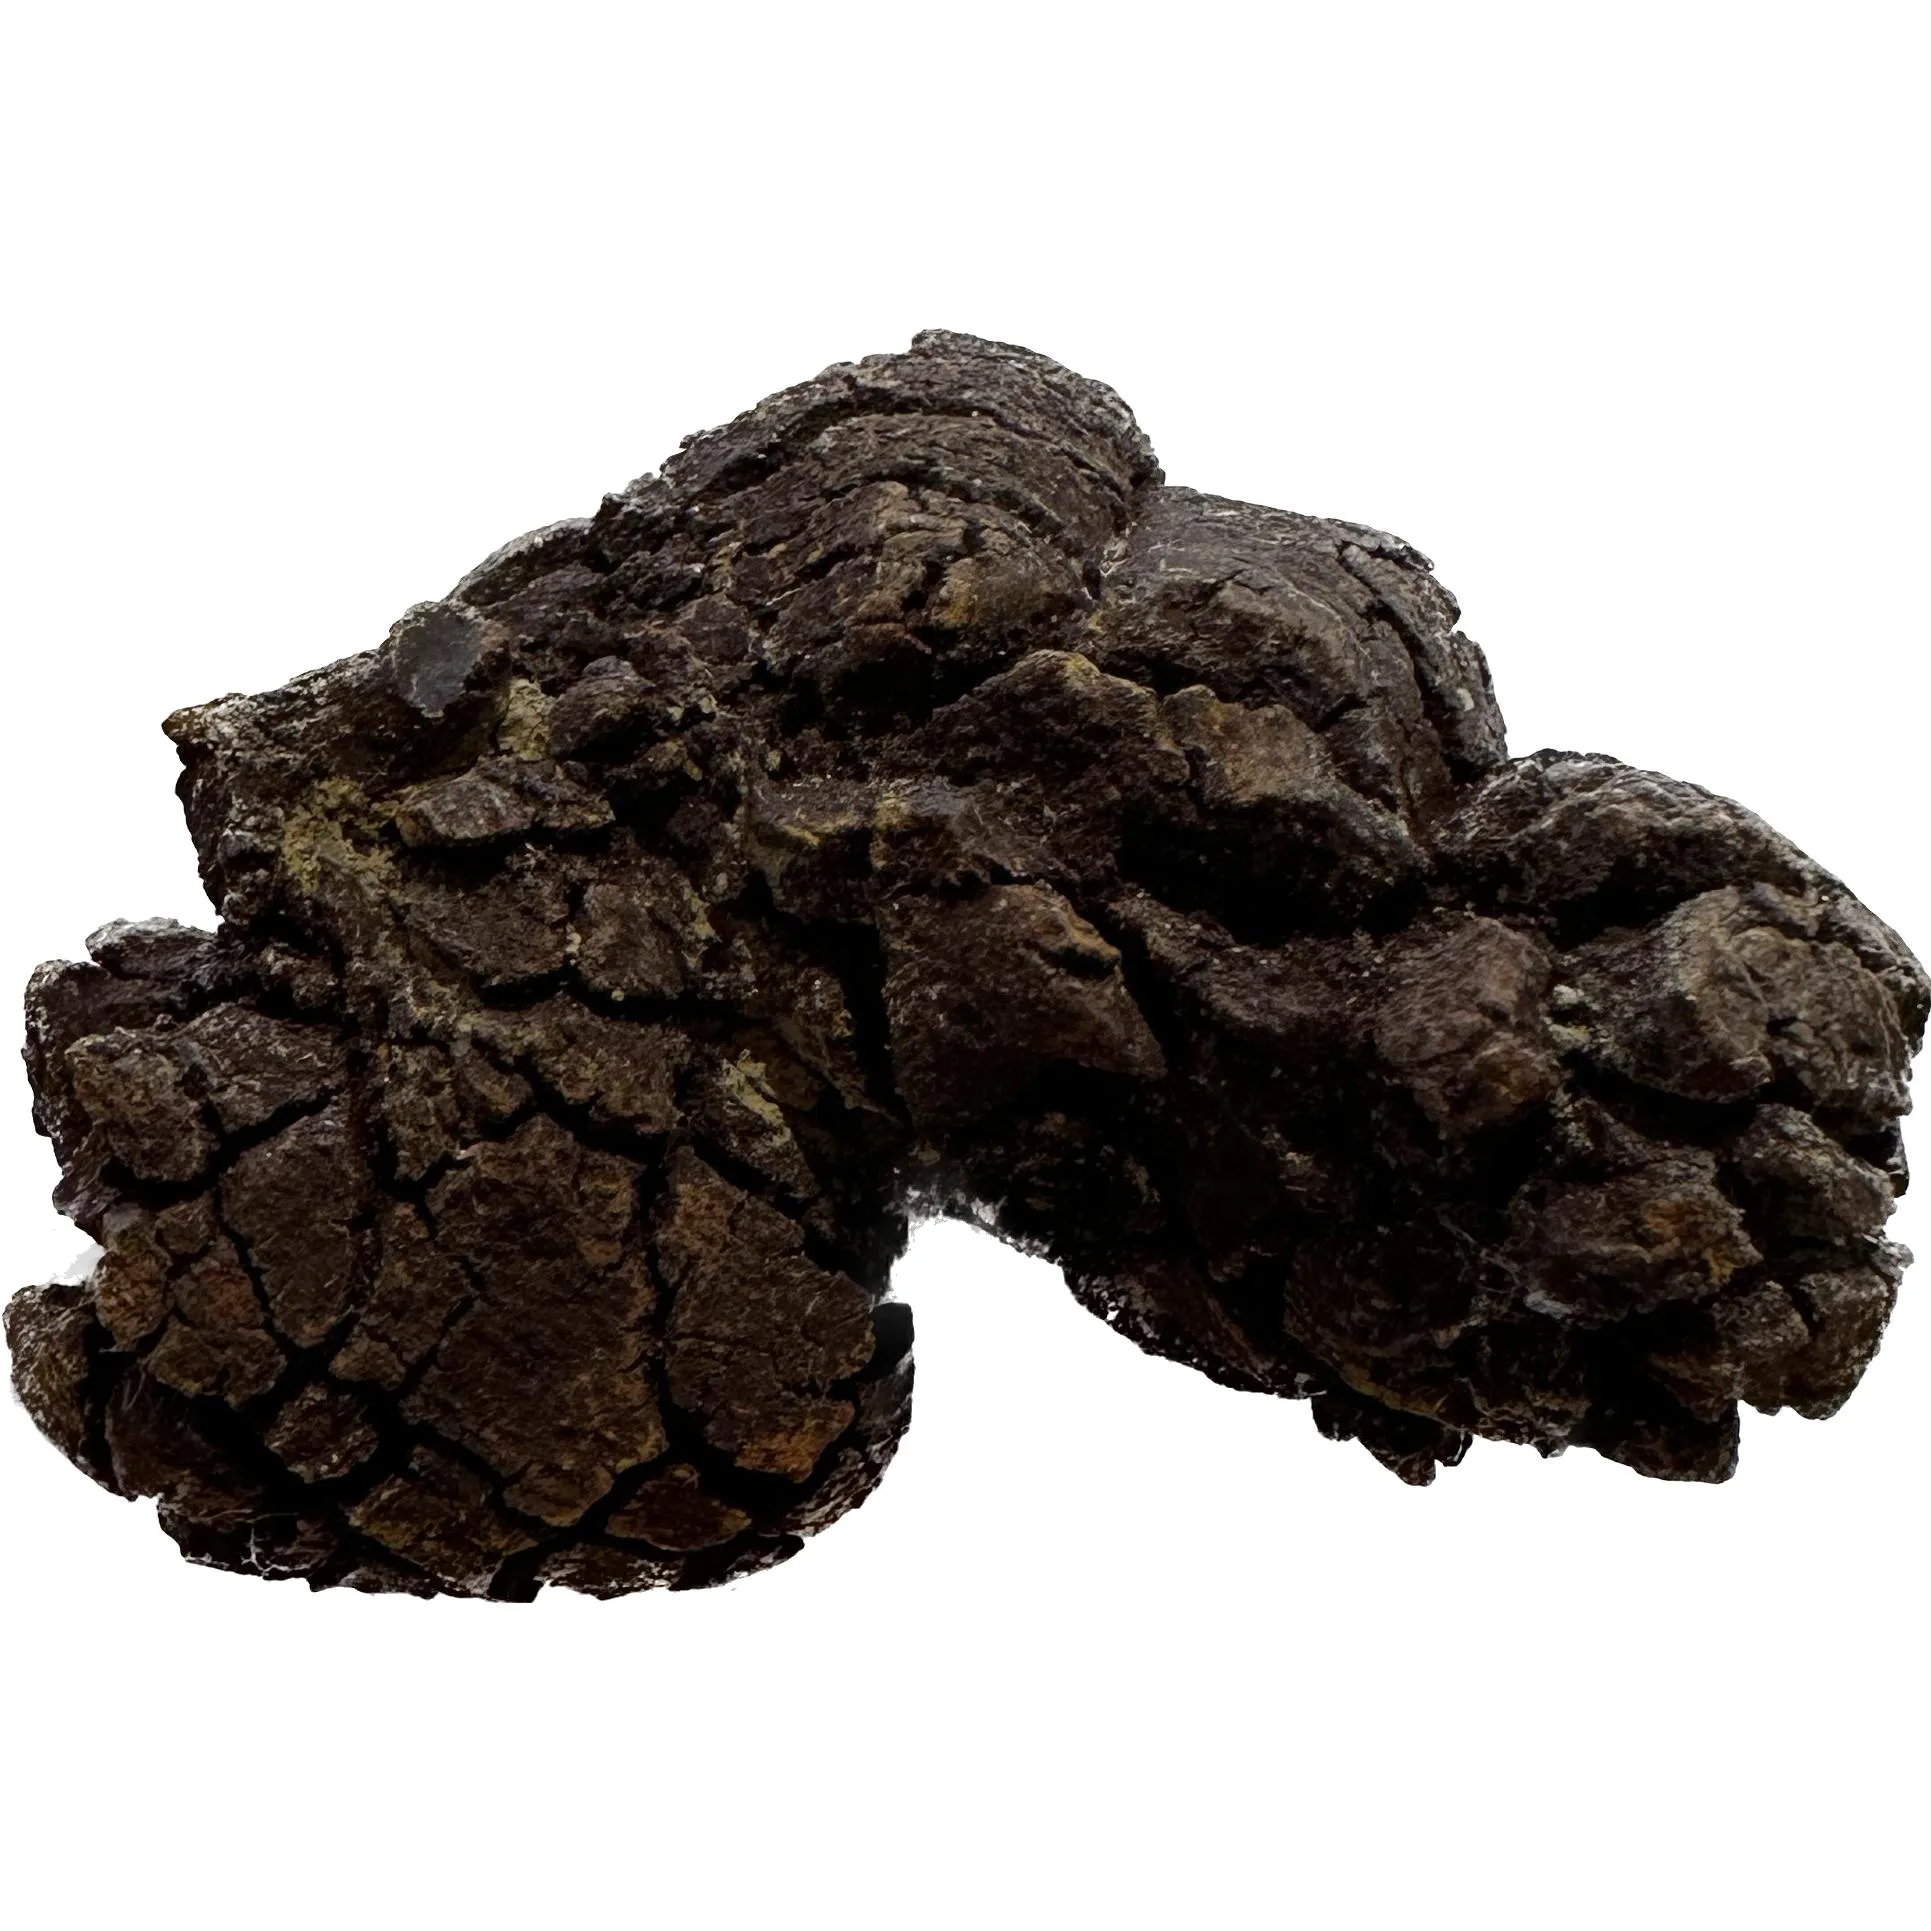 Coprolite (poop), Turtle, Cretaceous age Prehistoric Online